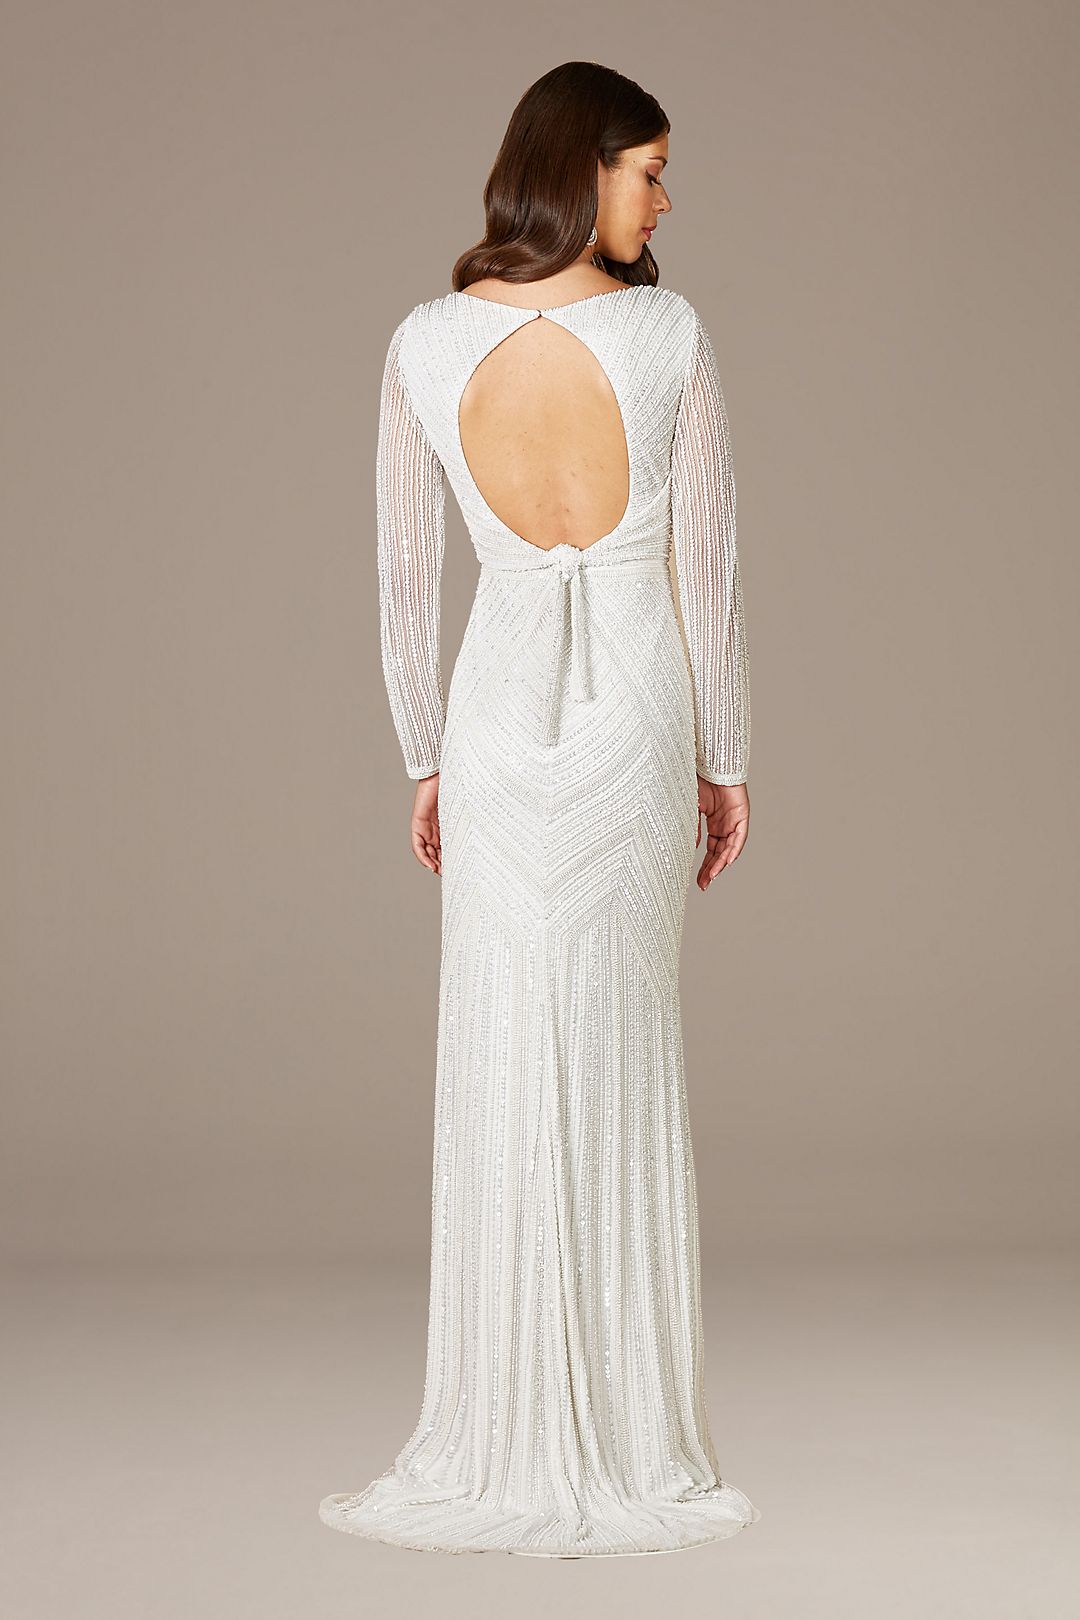 Lara Finley Sheer Sleeve Wedding Gown Image 3